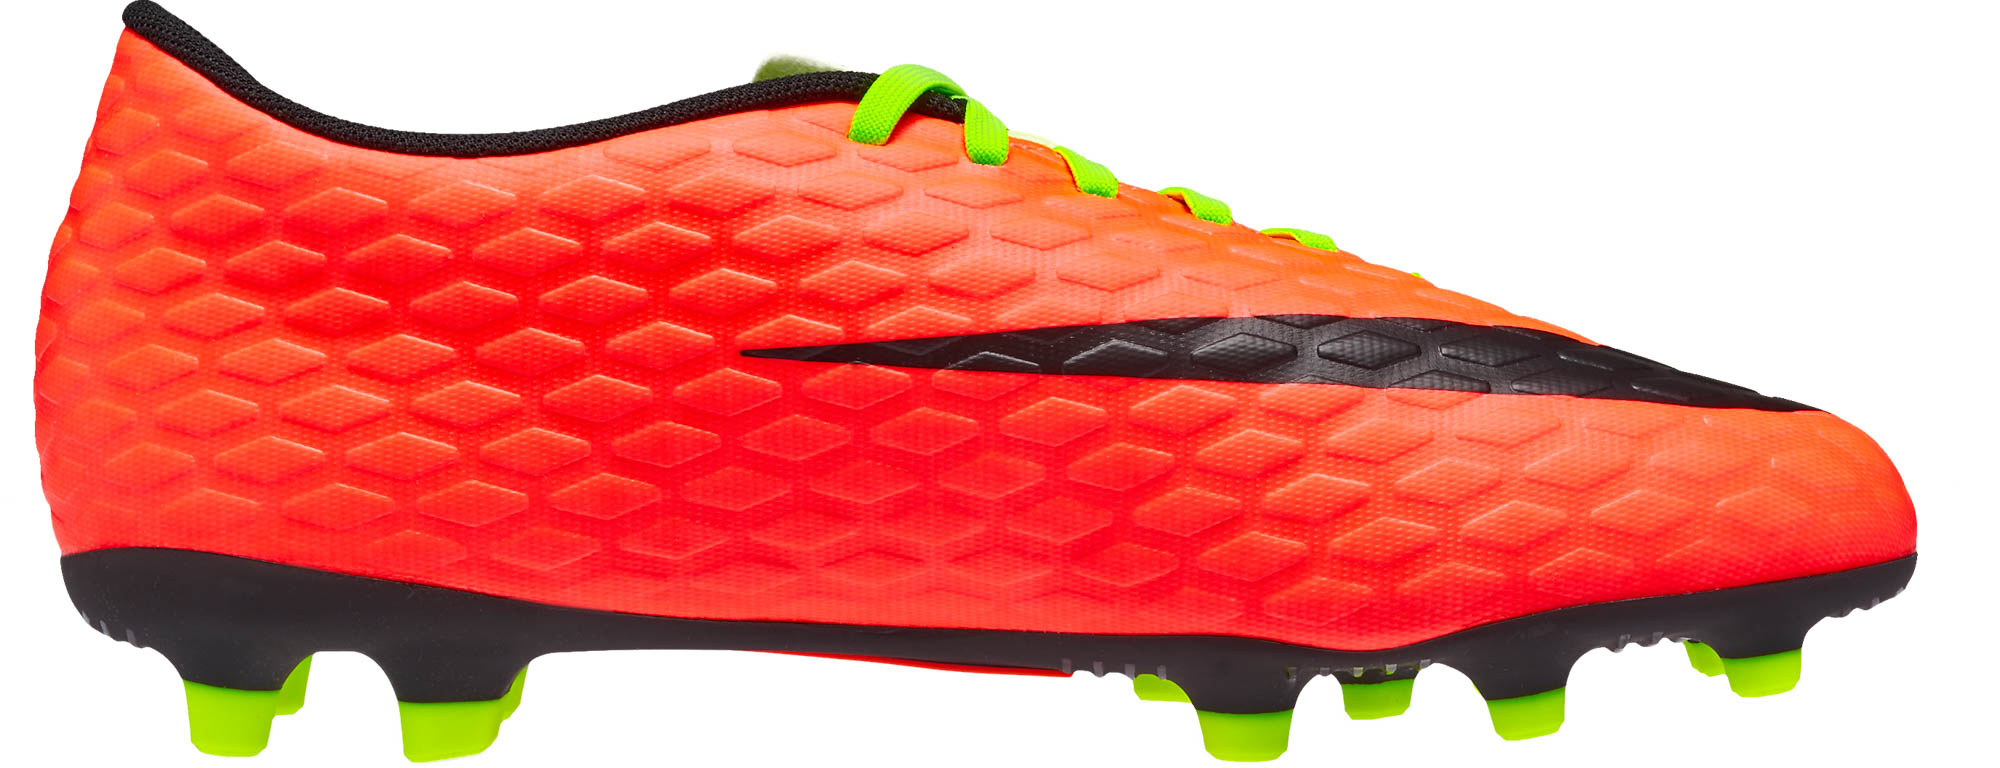 Nike Hypervenom Phade FG Cleats - Electric Green & Orange - Soccer Master